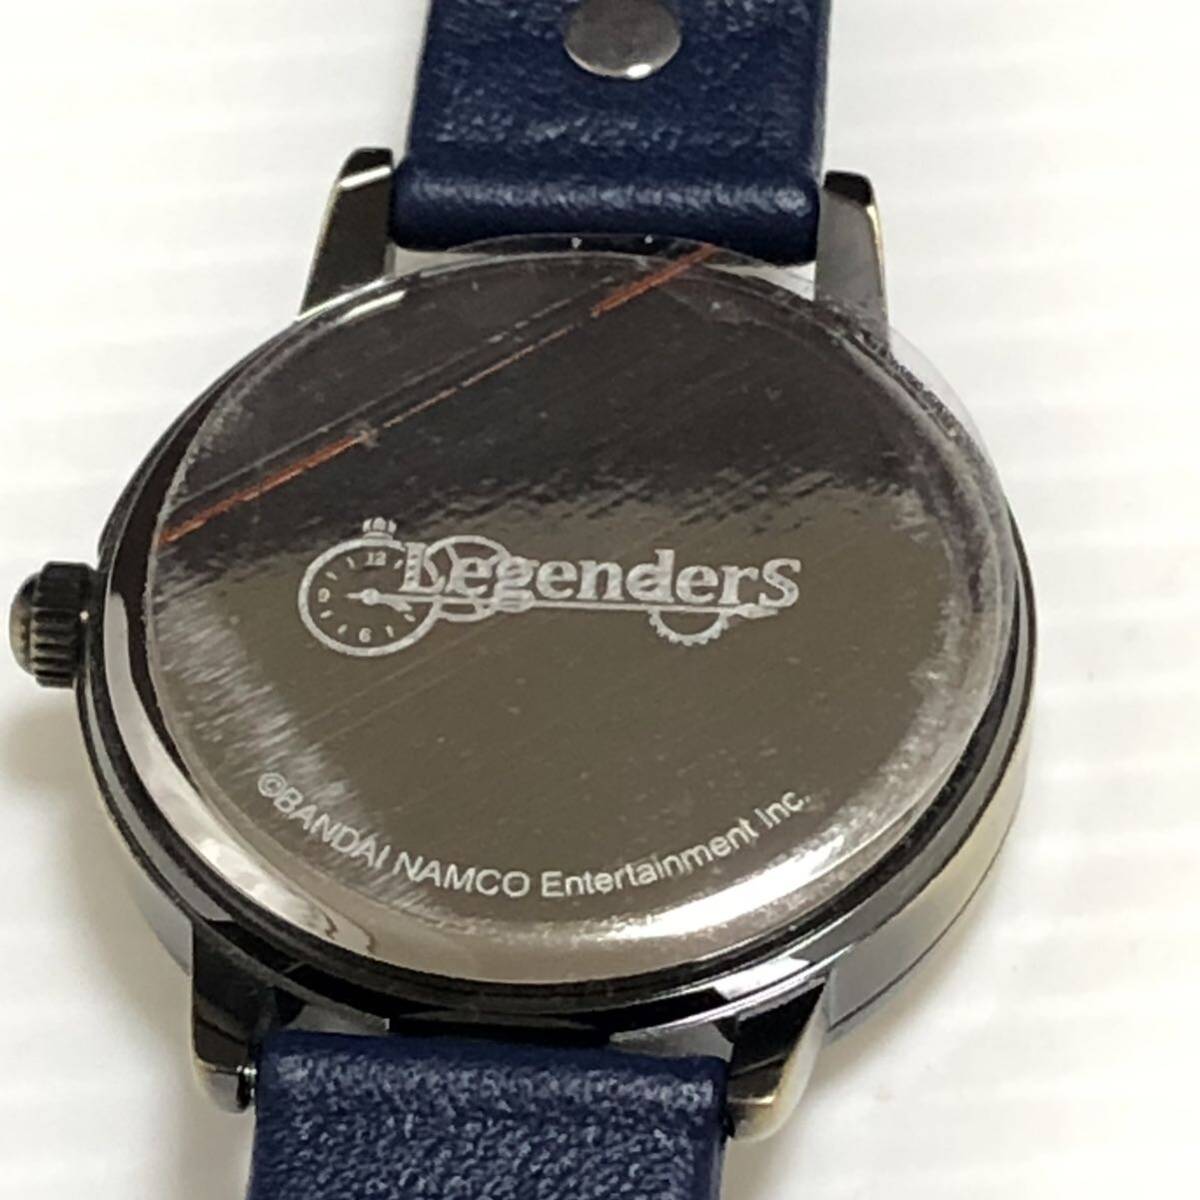 m209-0583-15 Legenders モデル 腕時計 アイドルマスター SideM SuperGroupies 電池切れ 動作未確認_画像10